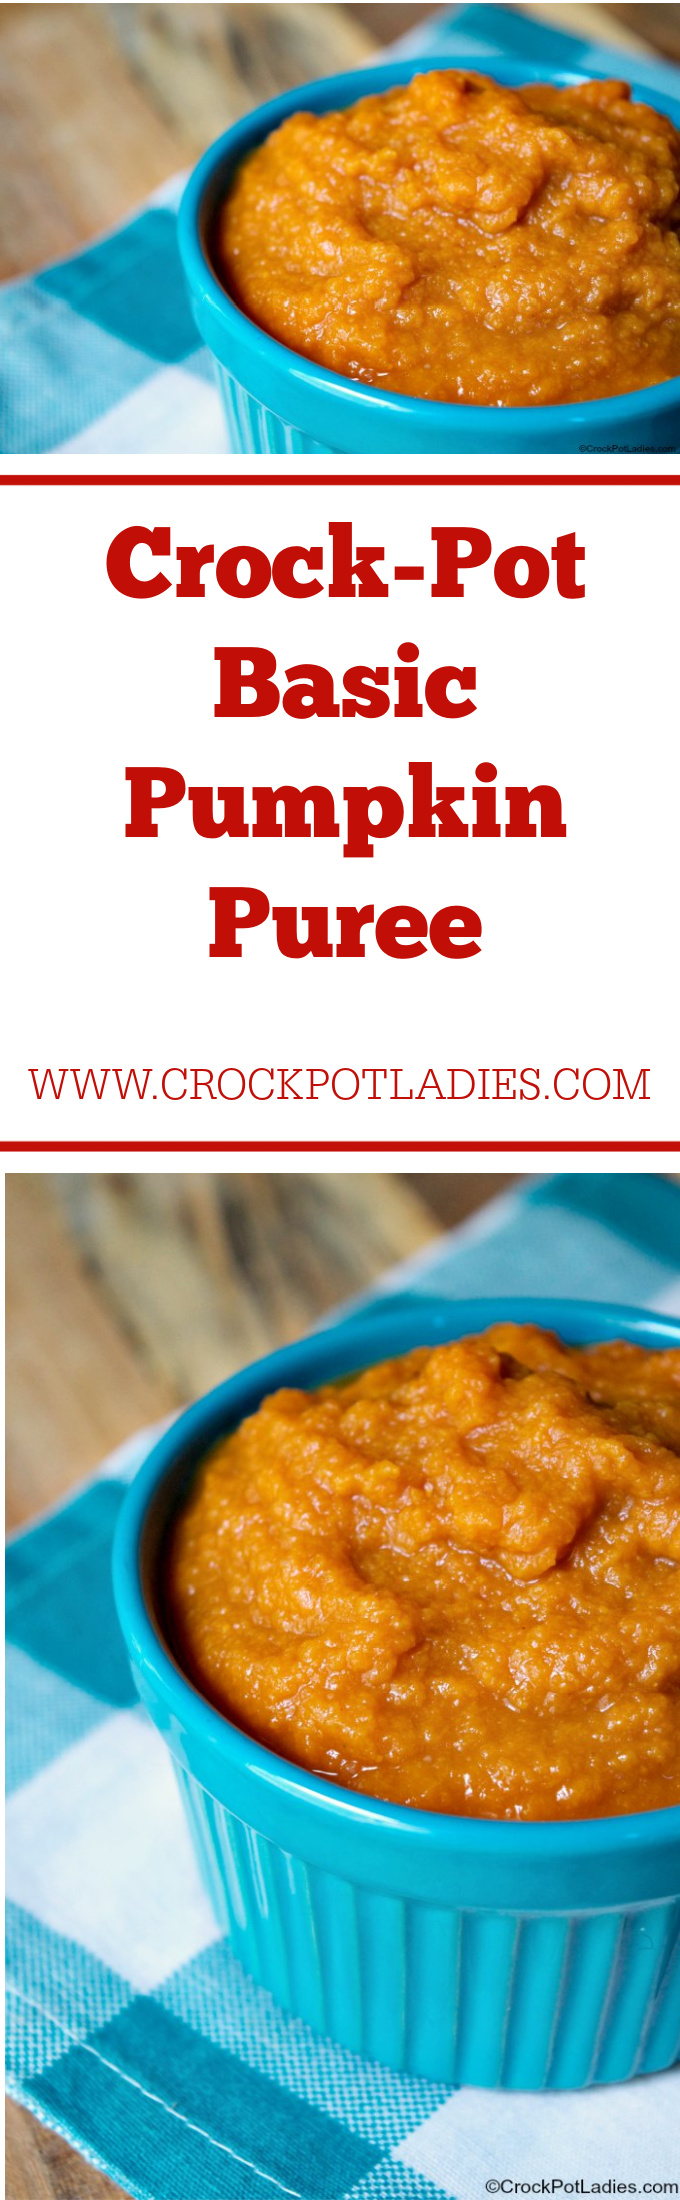 Crock-Pot Basic Pumpkin Puree